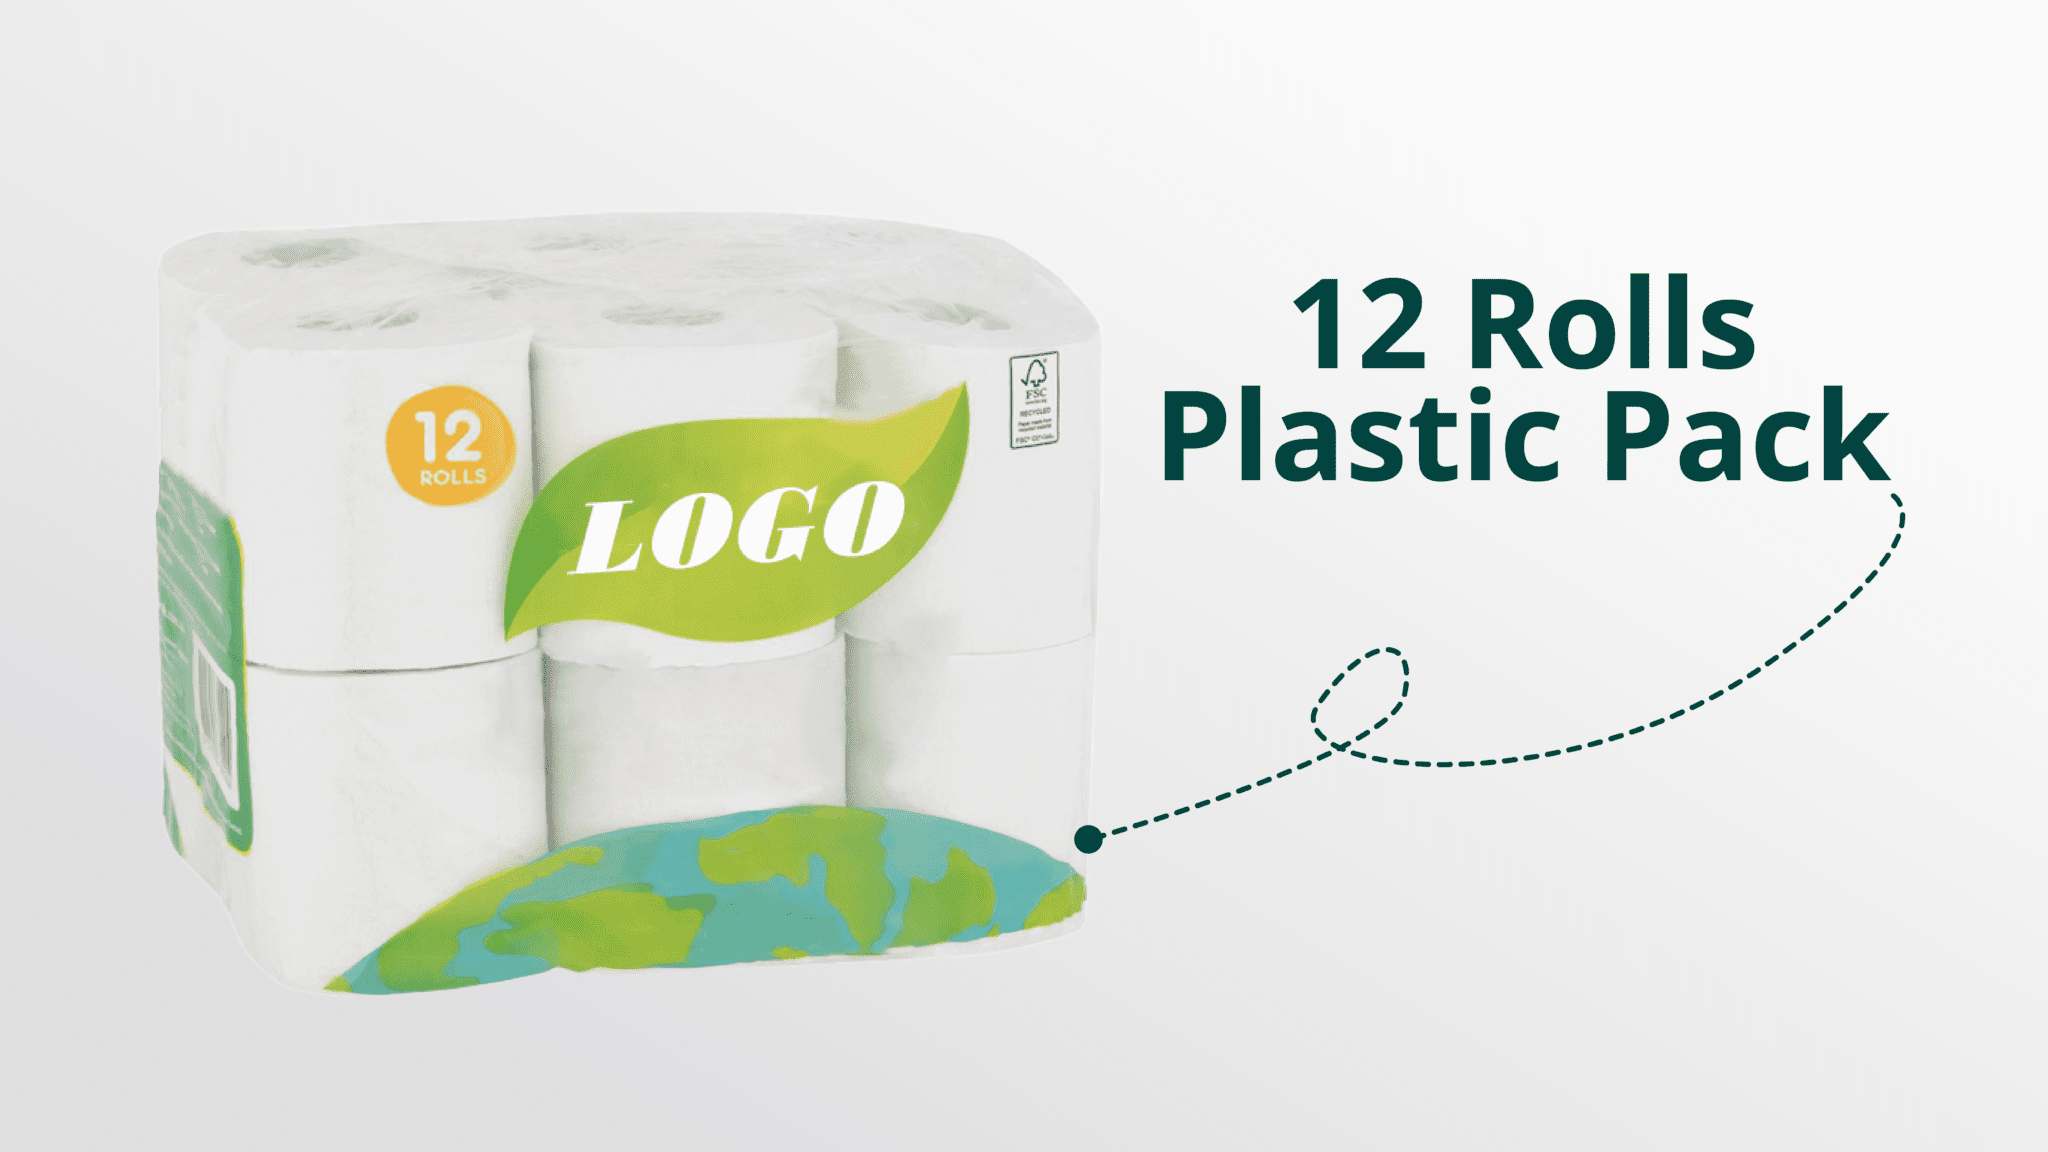 12 rolls plastic pack toilet paper